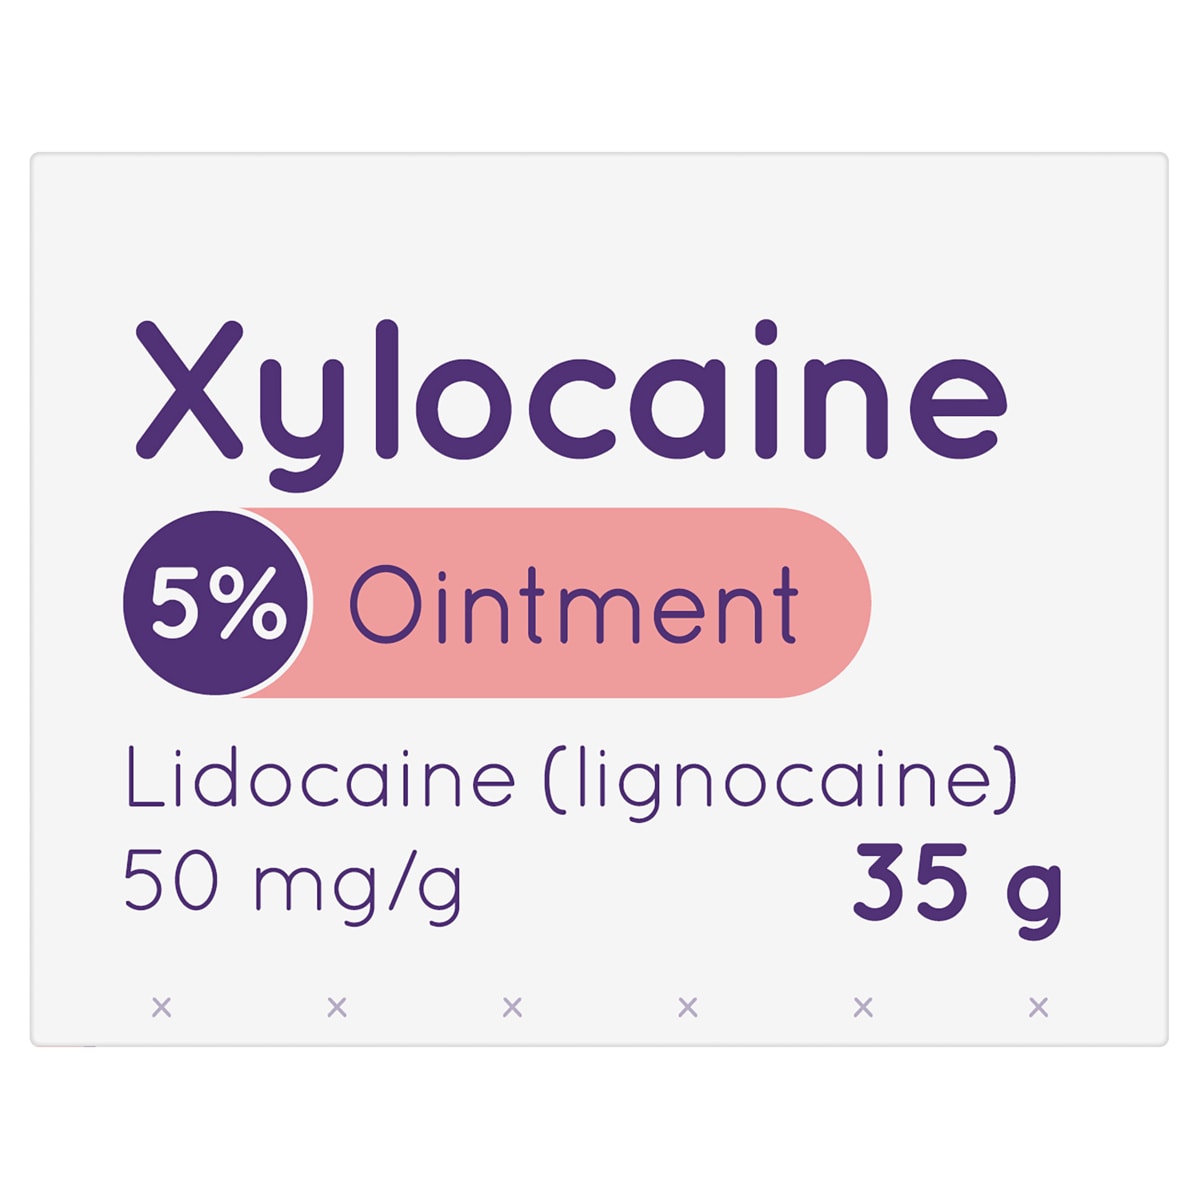 Xylocaine 5% Ointment 35g